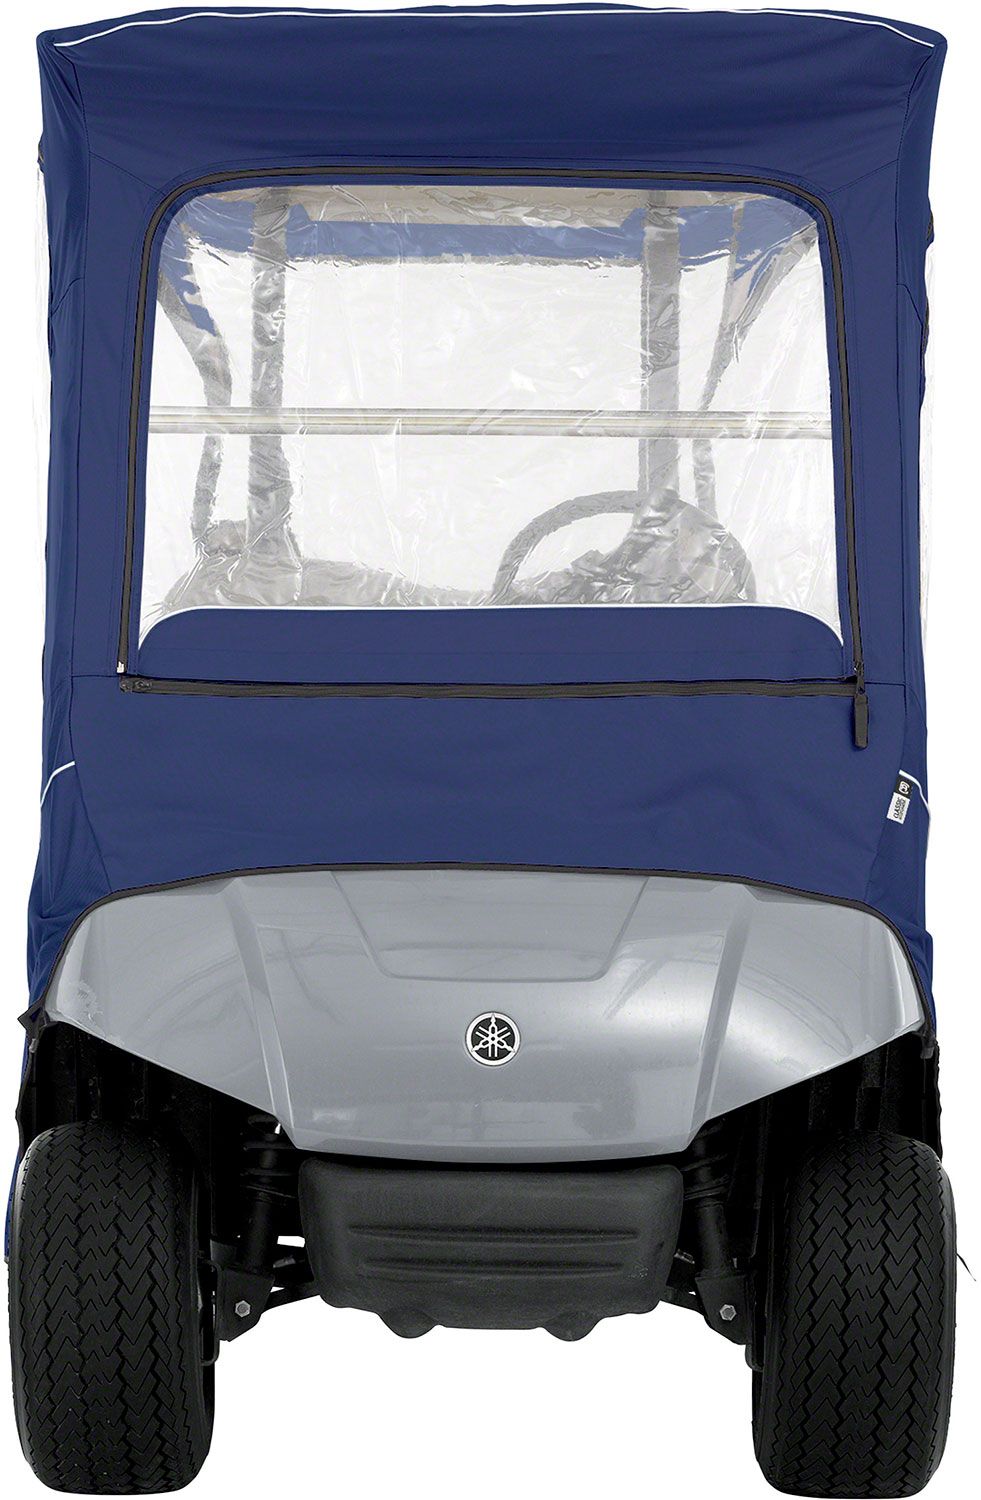 Classic Accessories Fairway FadeSafe Yamaha Golf Cart Enclosure – Navy